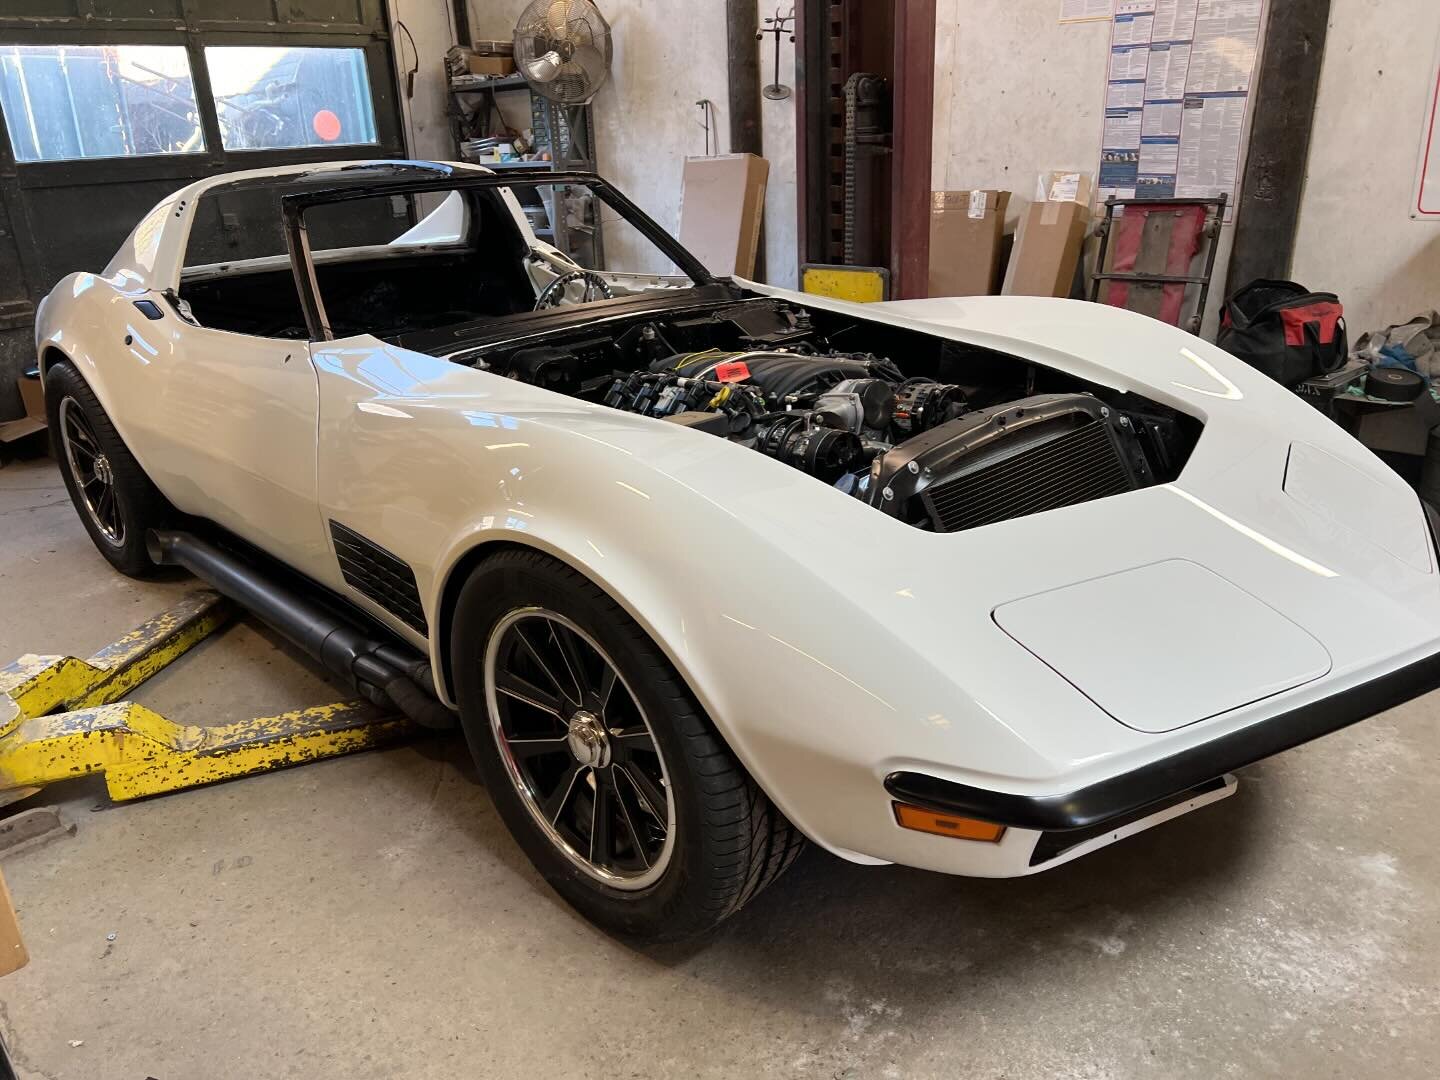 1972 Corvette Restomod Tail lights and rear bumpers assembled. #longvalleyautobody #thatgirlwhopaintscars #akzonobelrefinish #lesonal 1972corvette